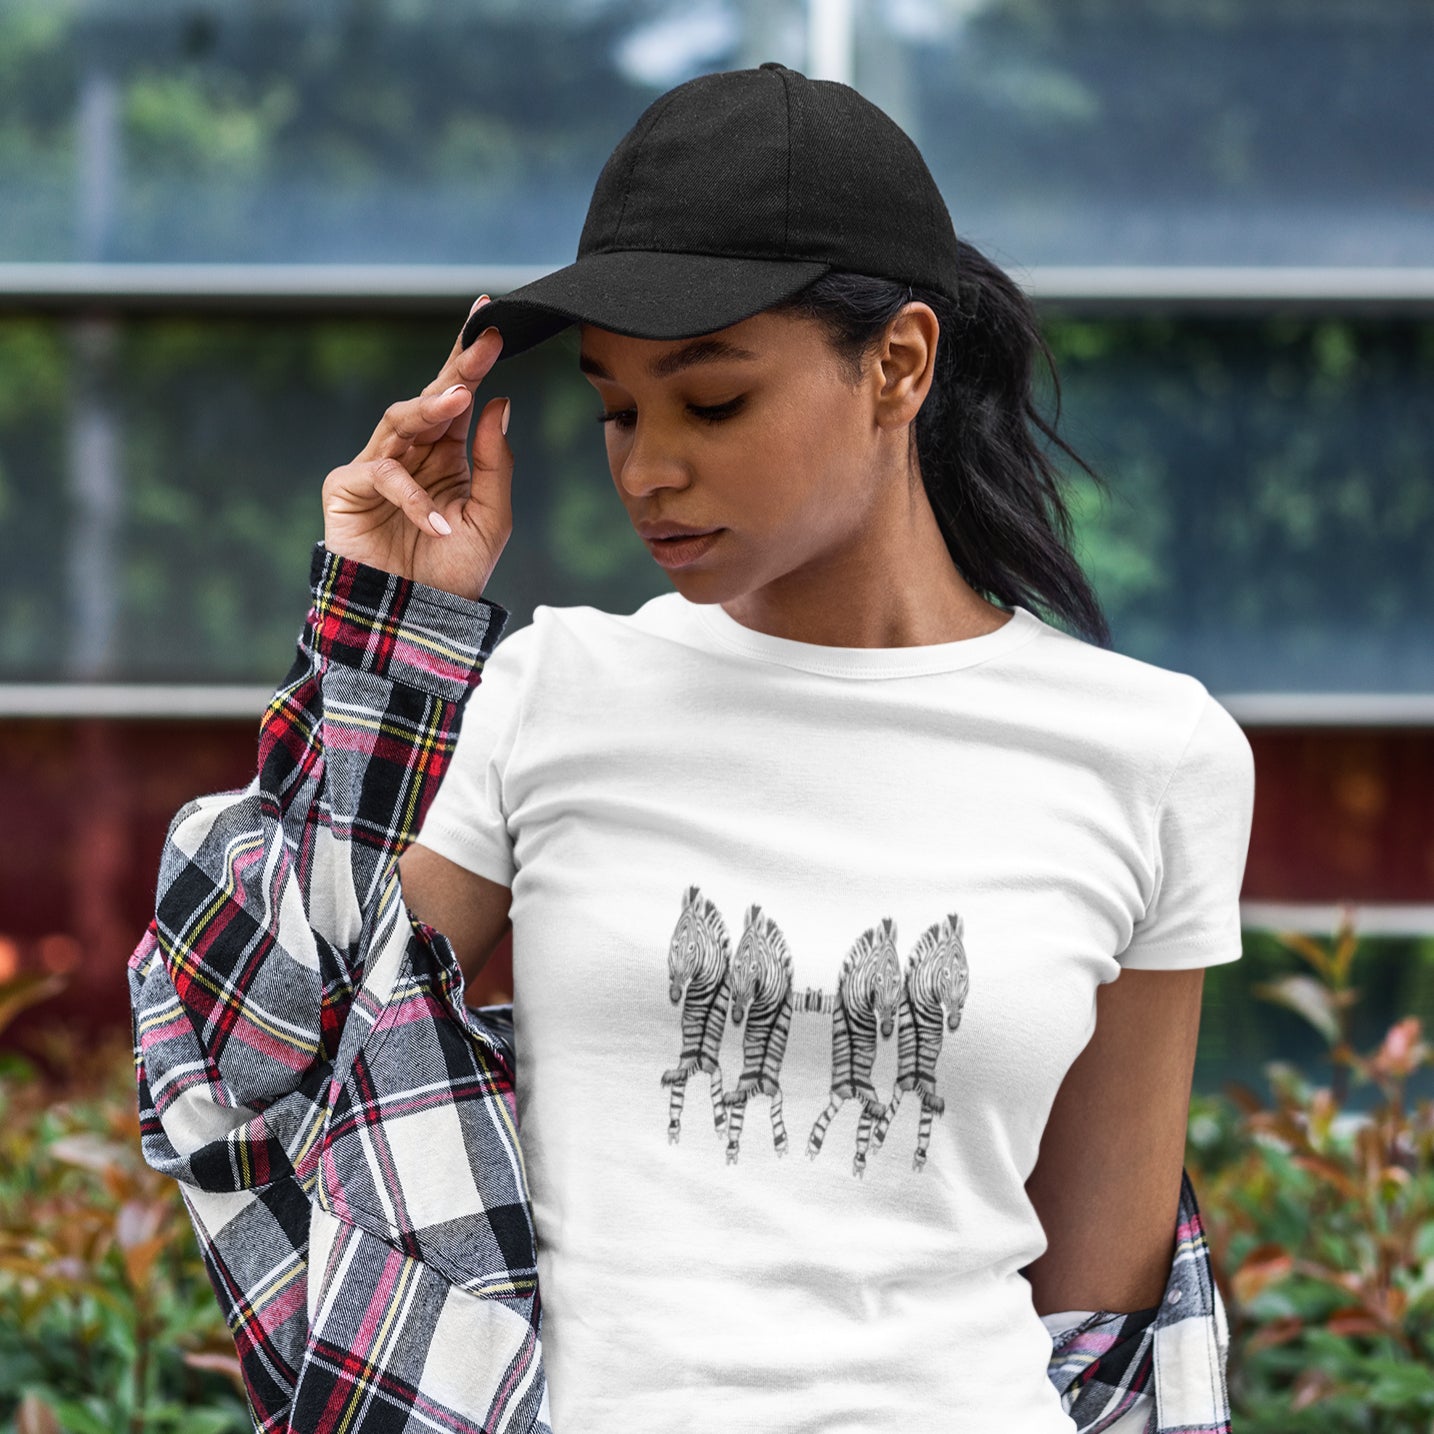 Zebra Roller Skates | 100% Organic Cotton T Shirt worn by a woman